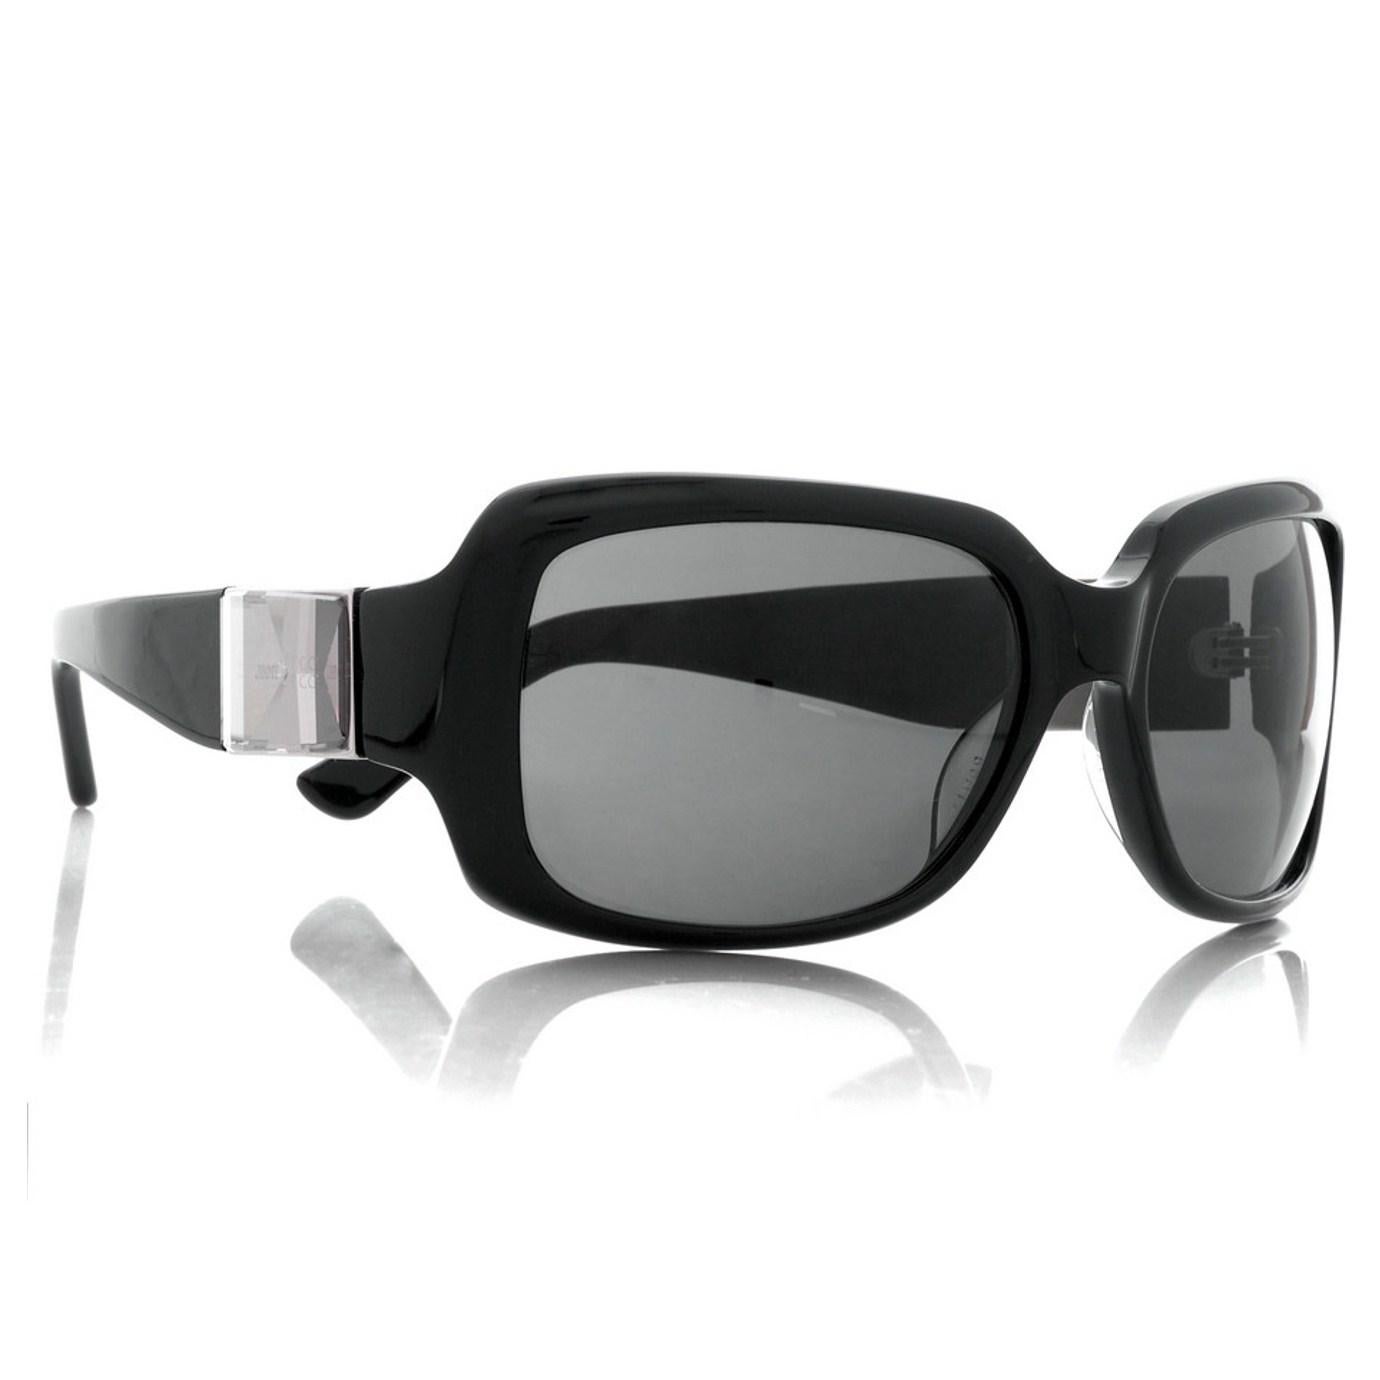 New Jimmy Choo Swarovski Sunglasses With Case & Box $595 5